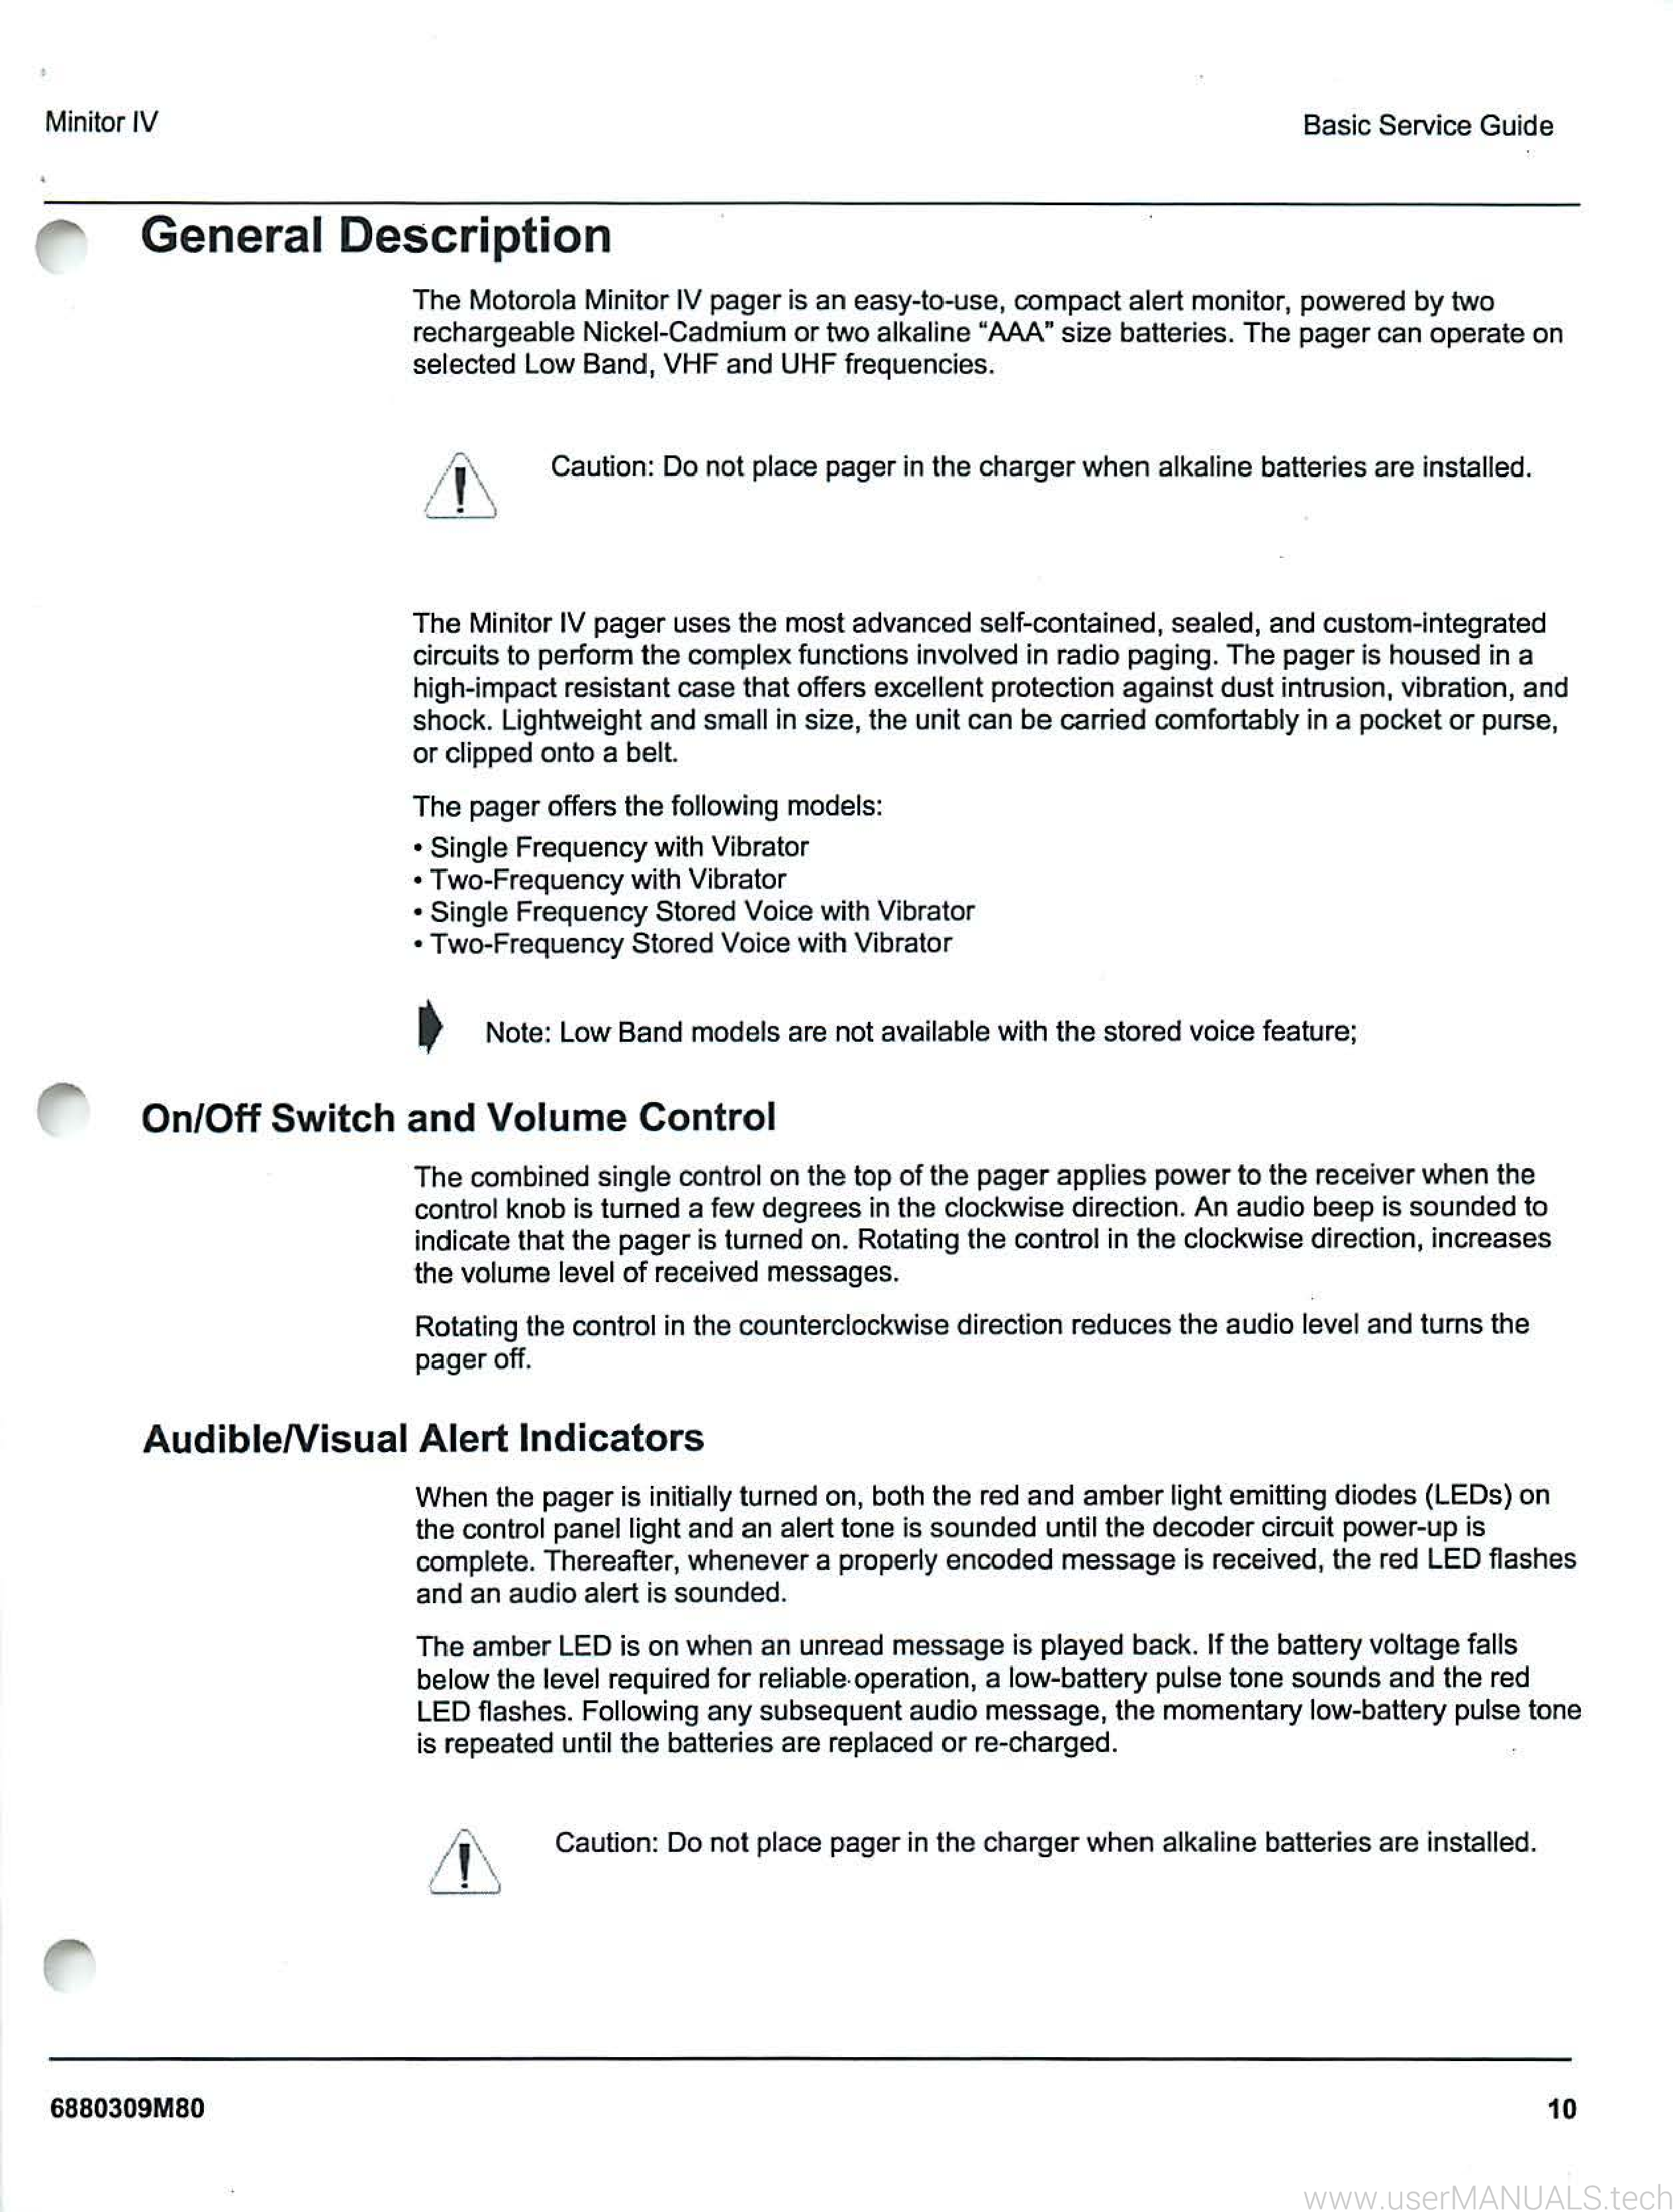 Motorola Minitor IV Basic Service, Page: 2